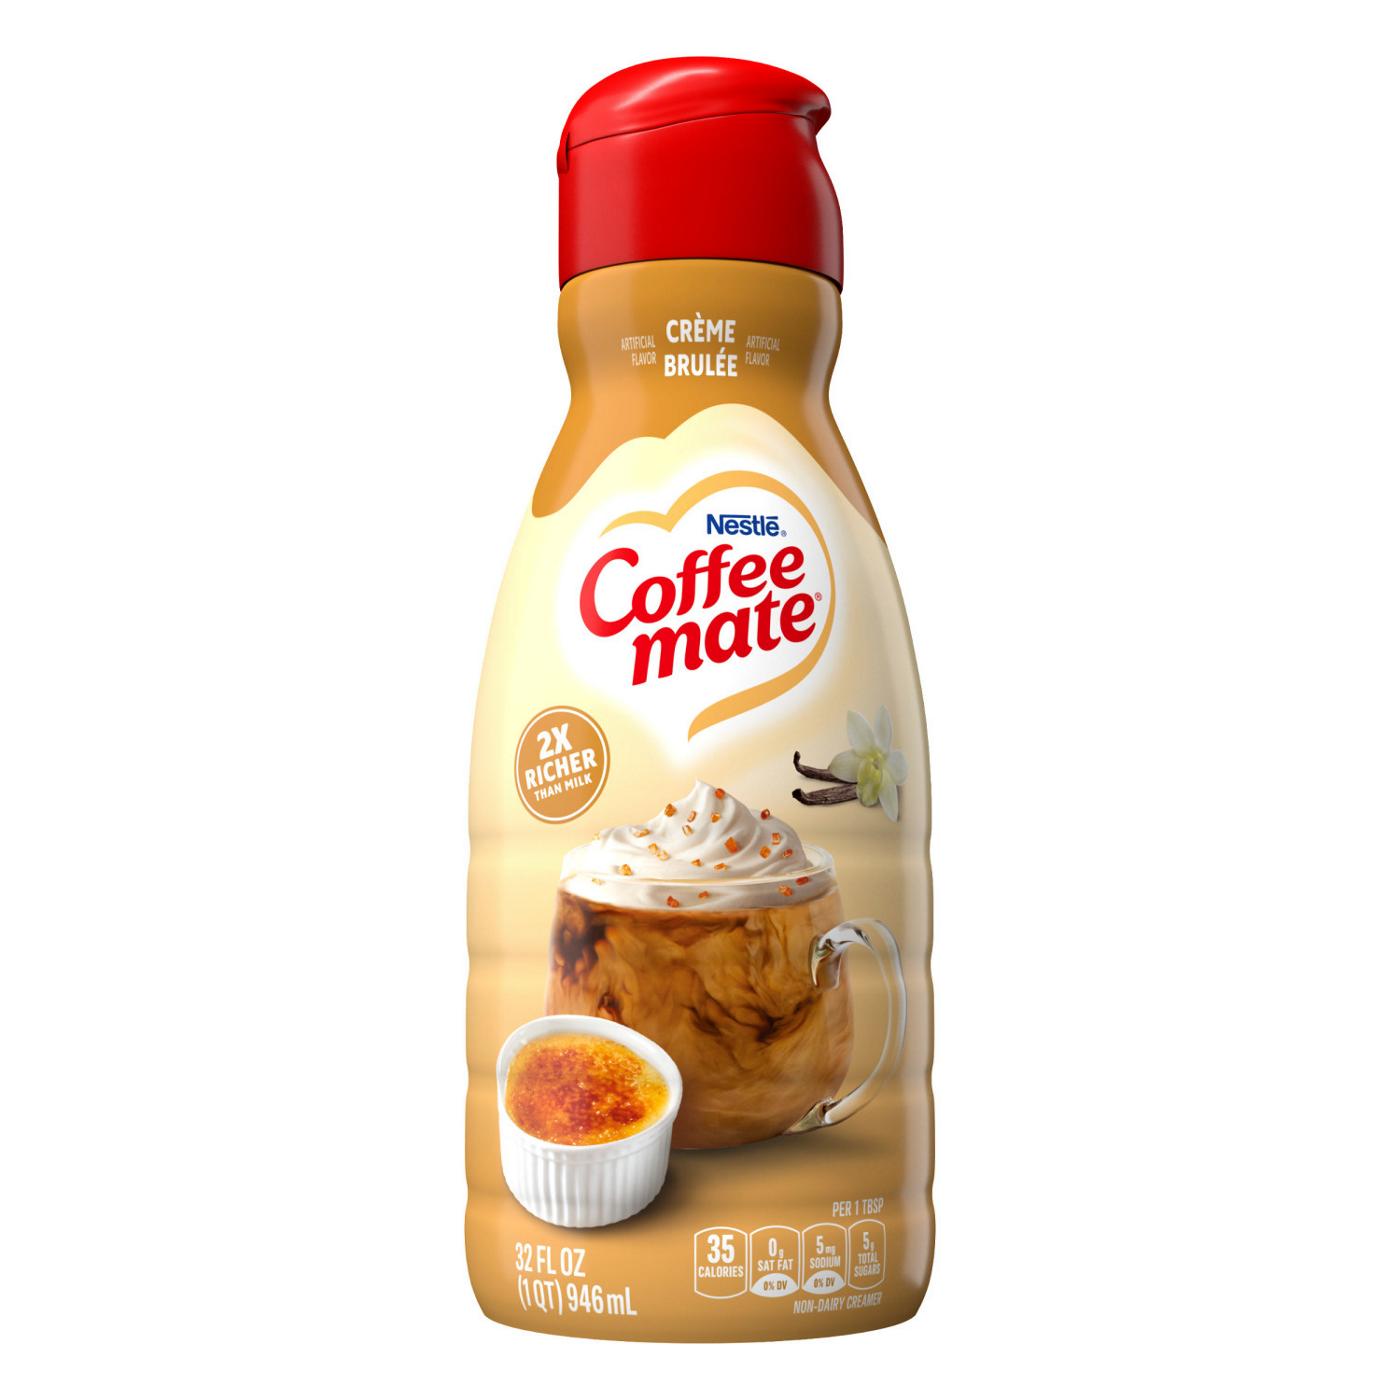 Nestle Coffee Mate Creme Brulee Liquid Coffee Creamer; image 1 of 7